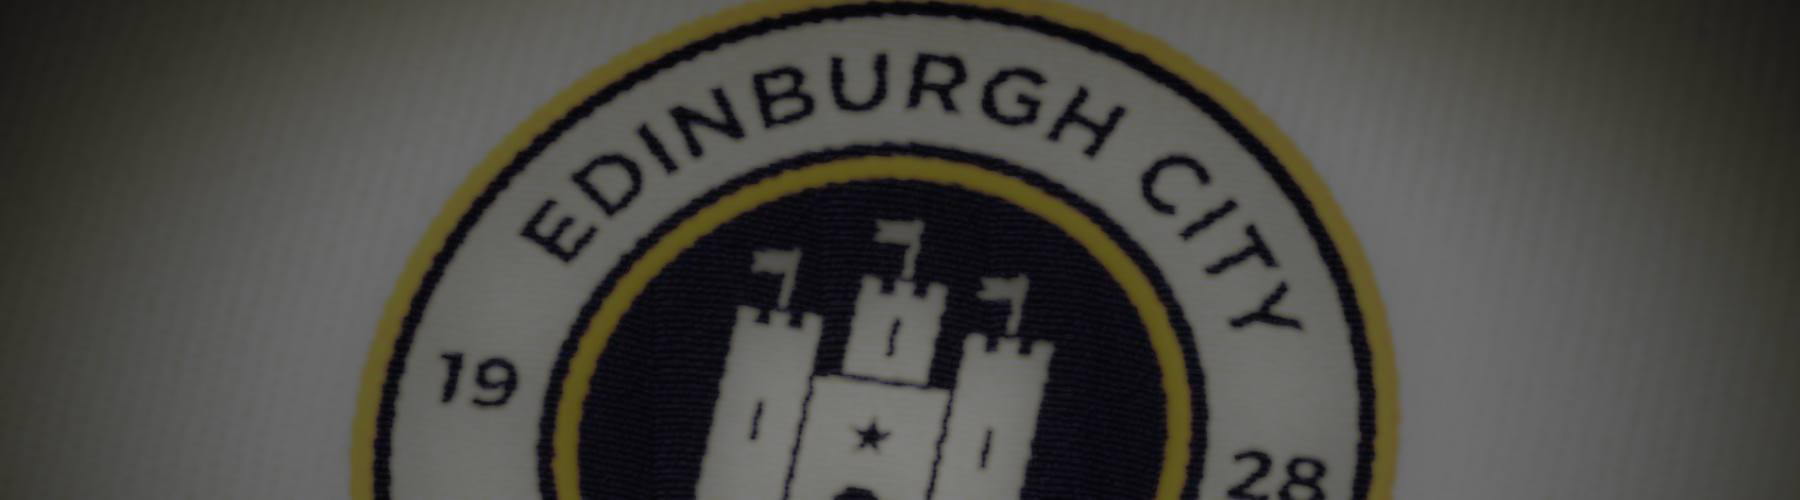 Edinburgh City FC Leisurewear